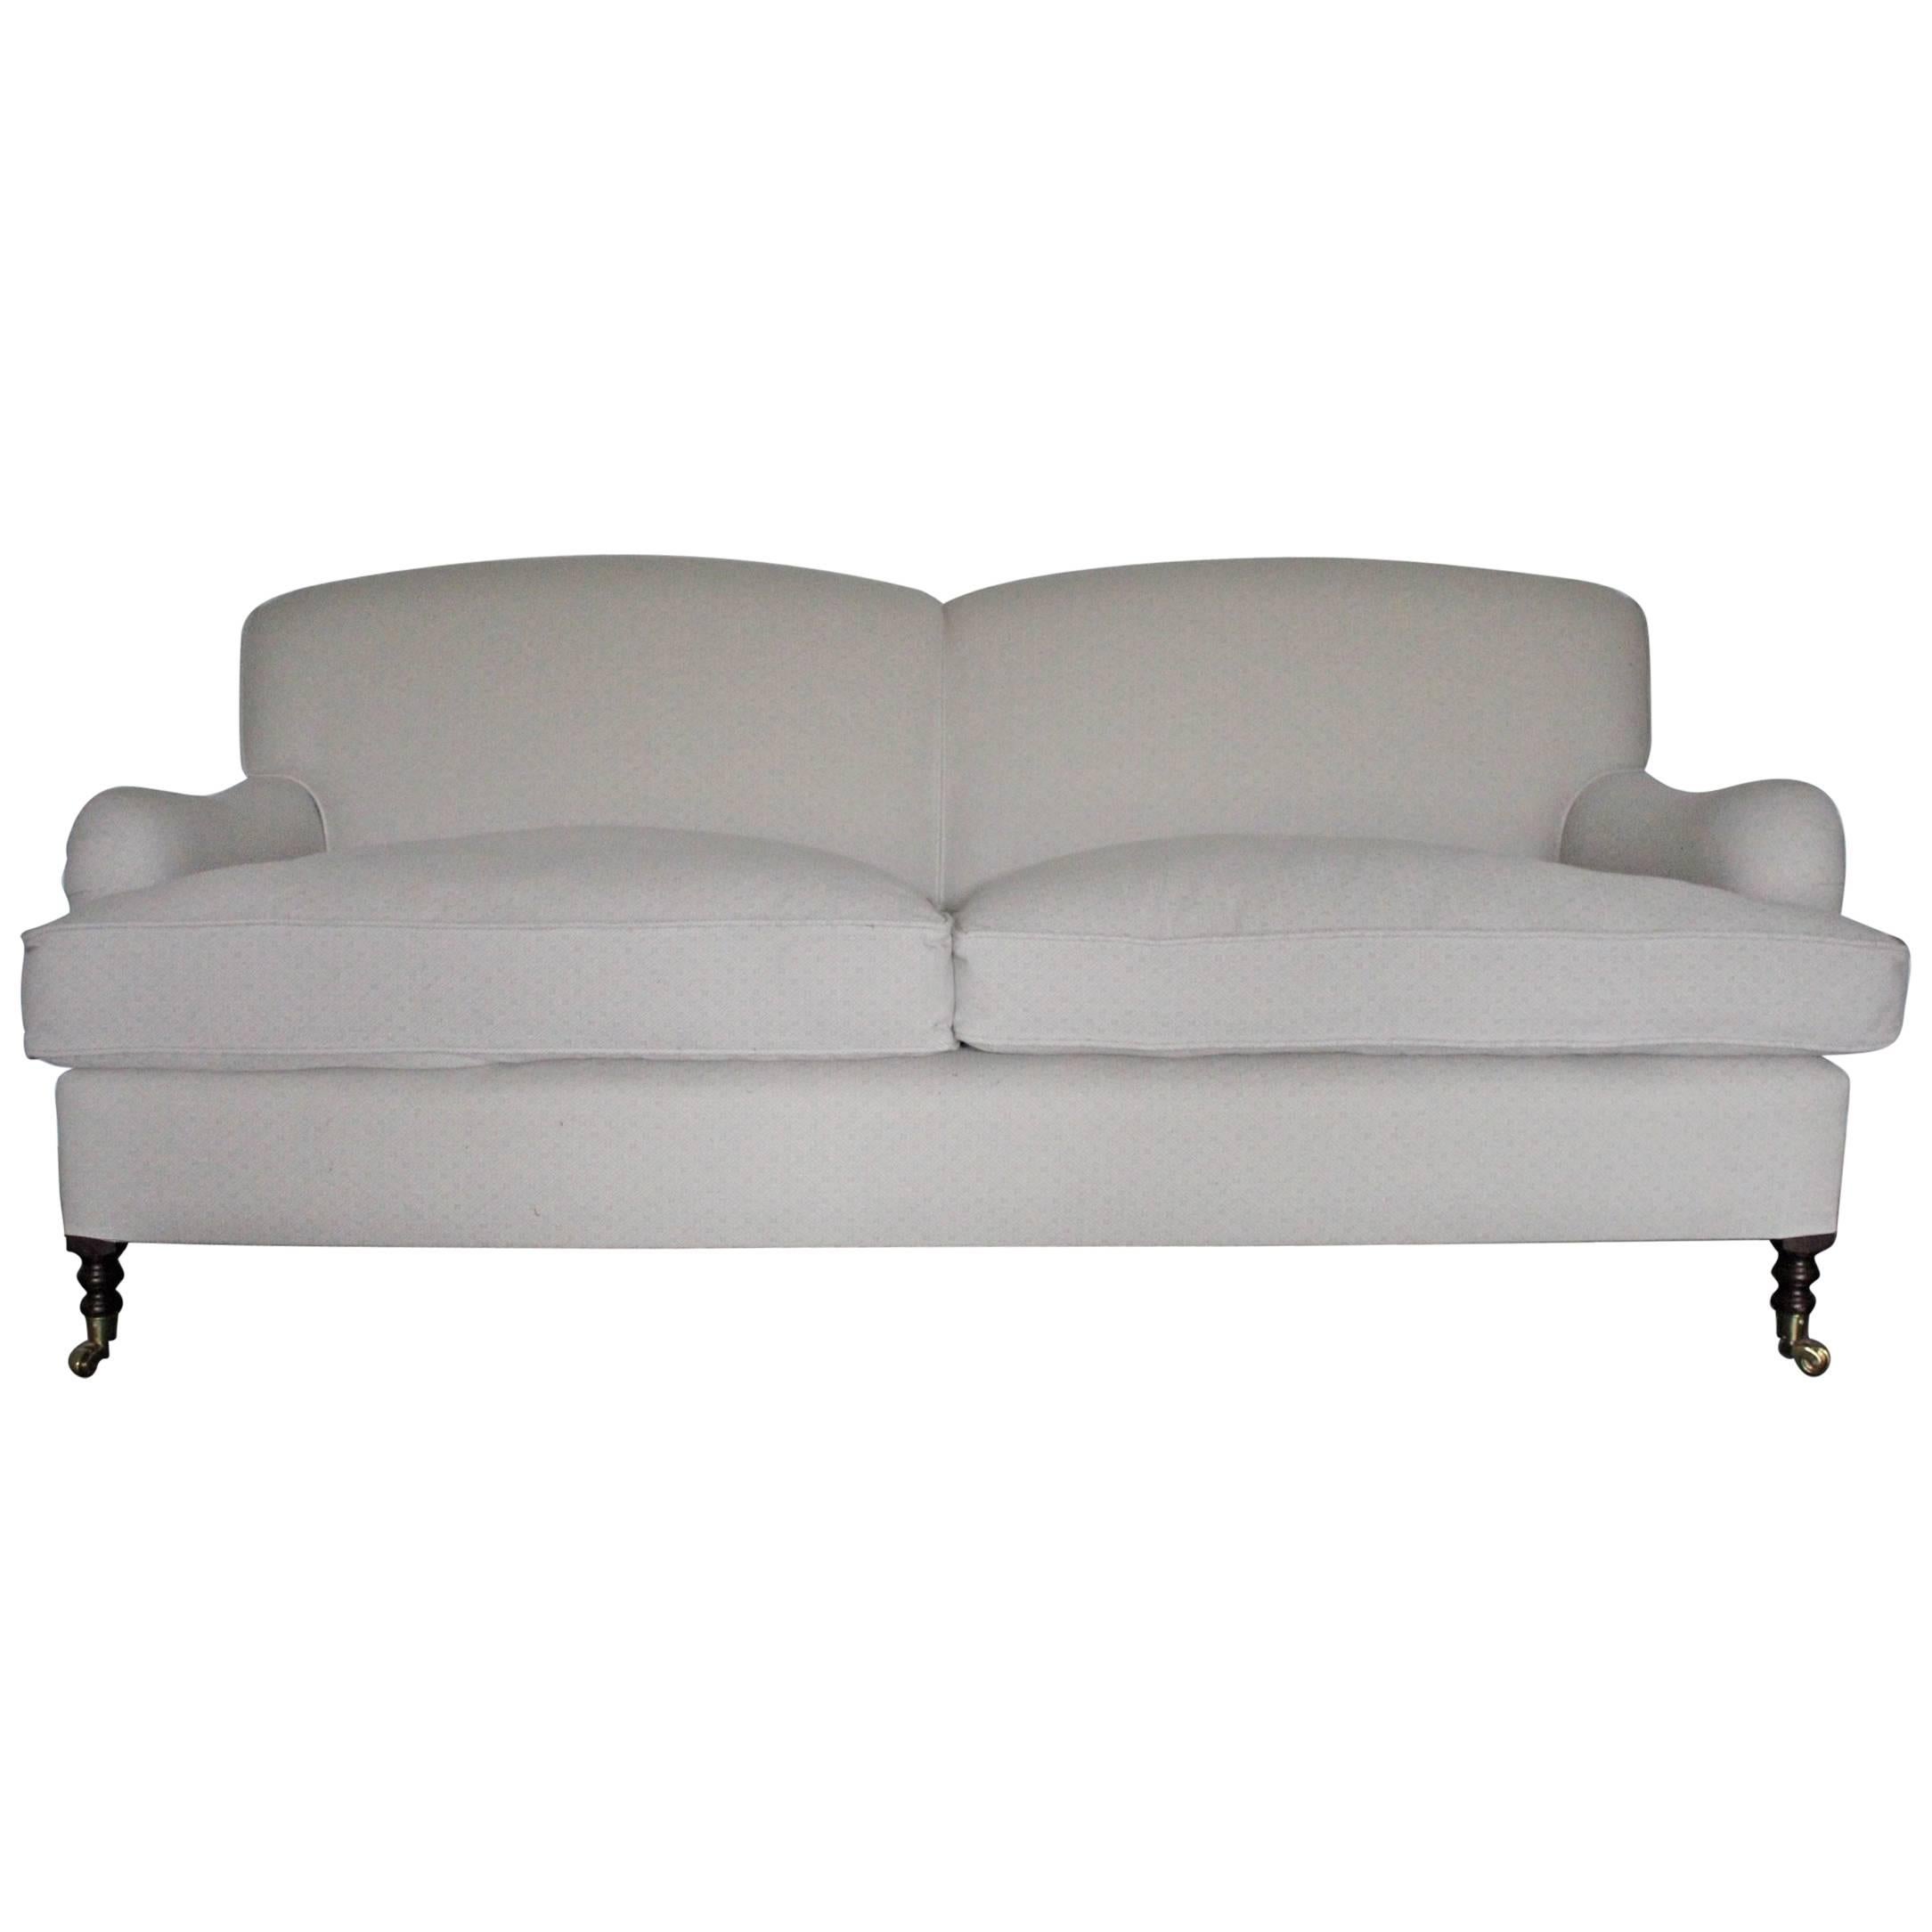 George Smith Signature “Standard-Arm” Medium Sofa in Silver Grey Motif Fabric